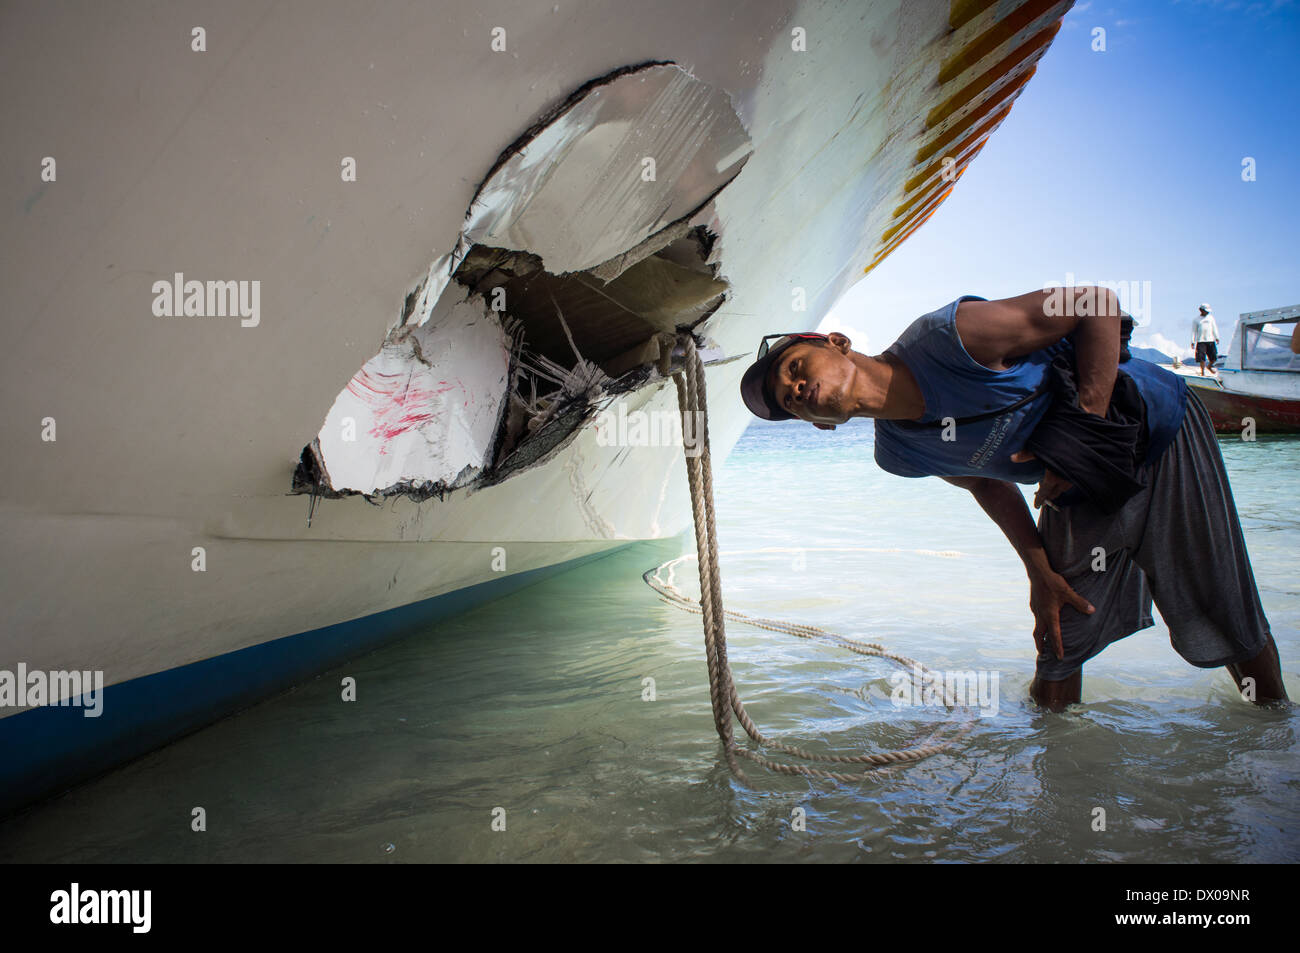 man looking at the damage to the ship, Gili islands, Trawangan, Indonesia Stock Photo